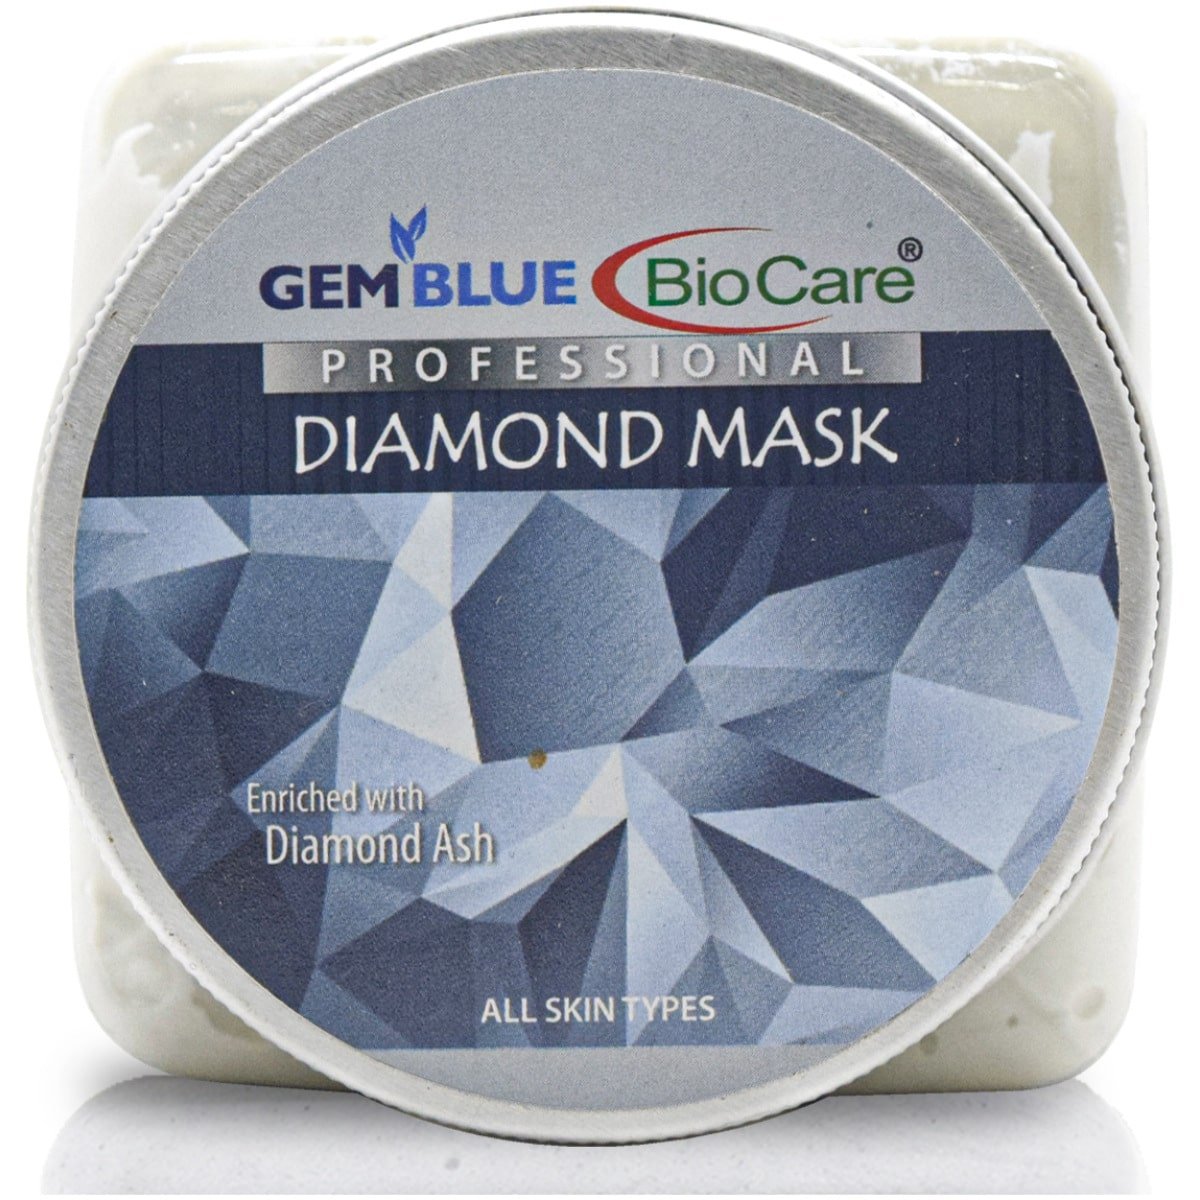 Gemblue Biocare Professional Diamond Mask 330ml